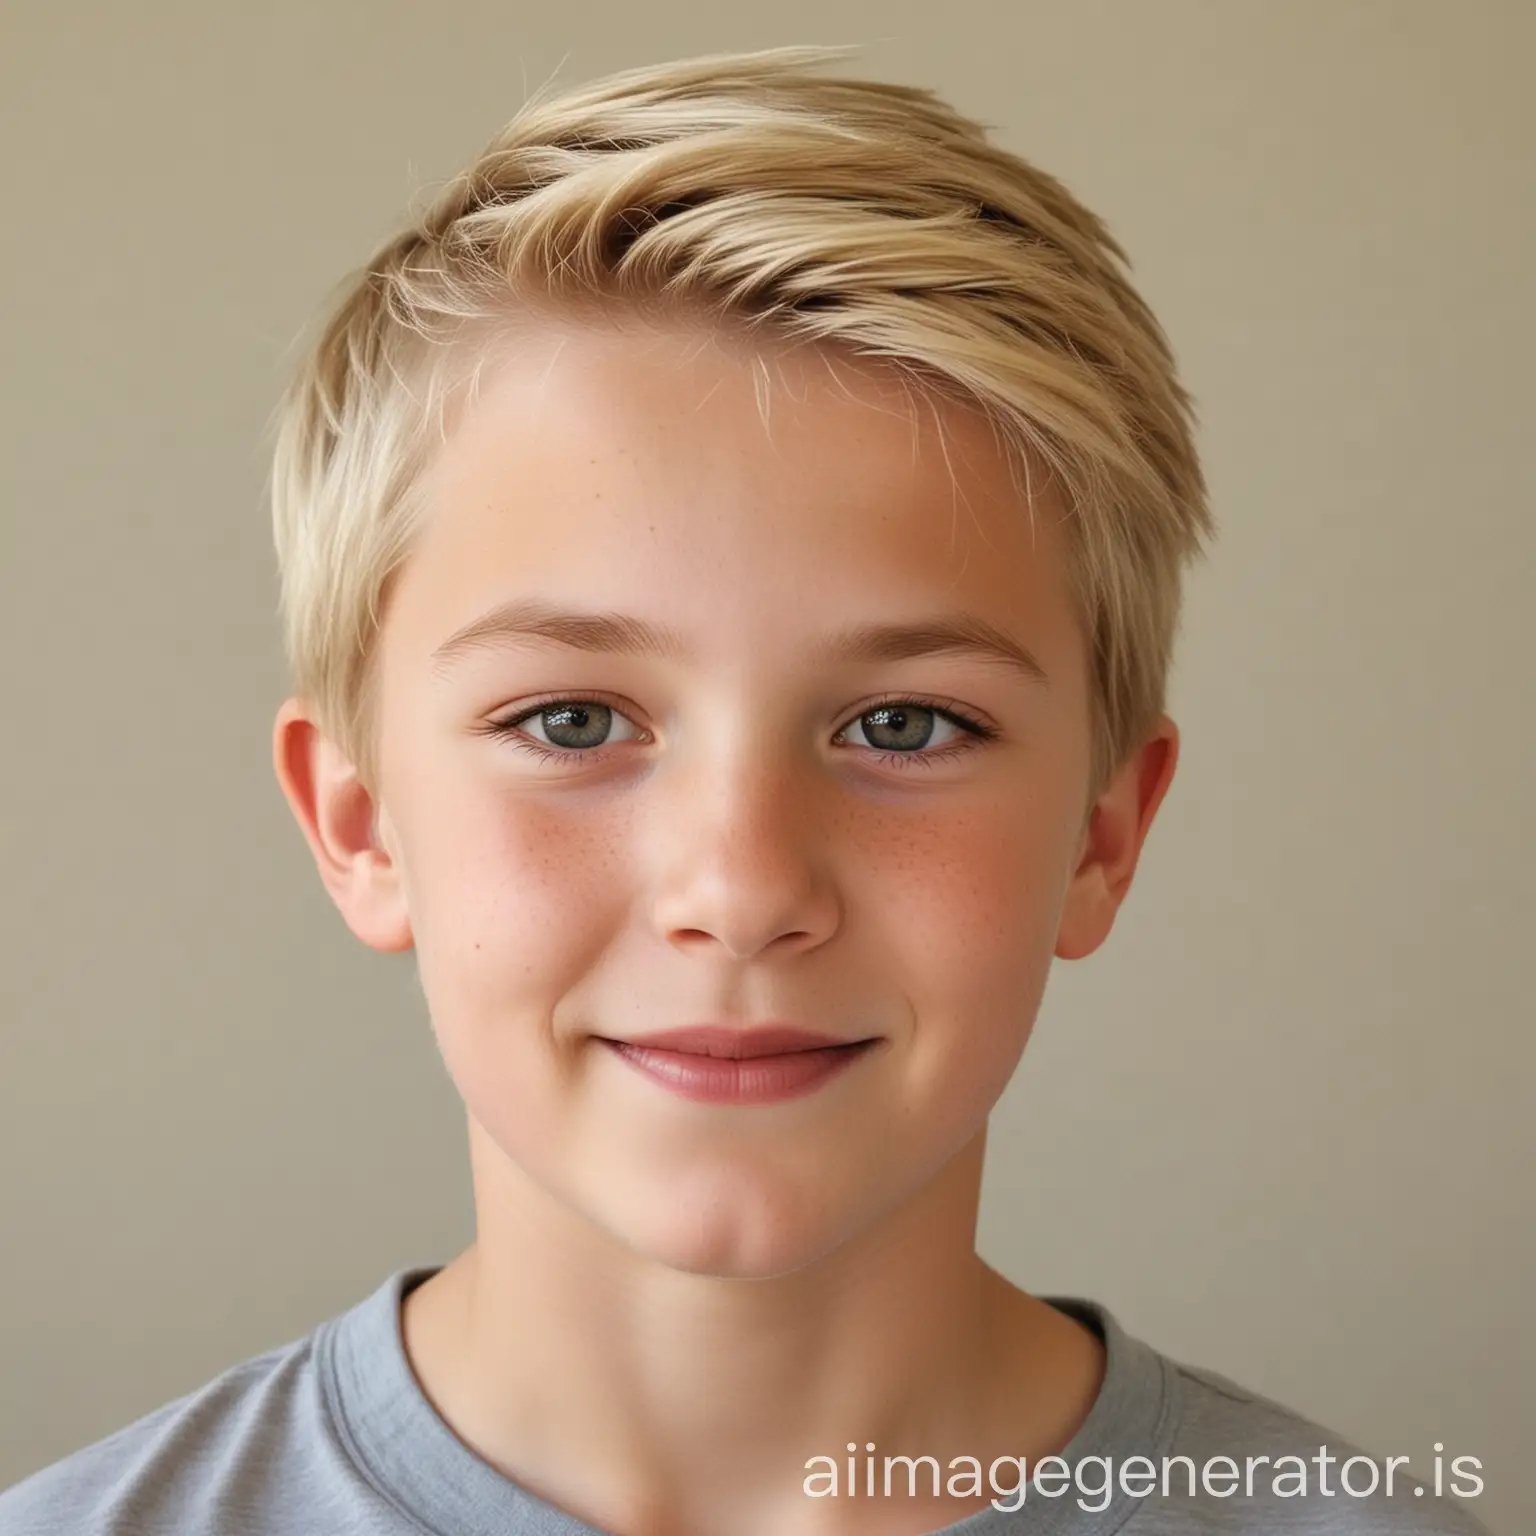 10 year old boy, blonde hair, fair skin